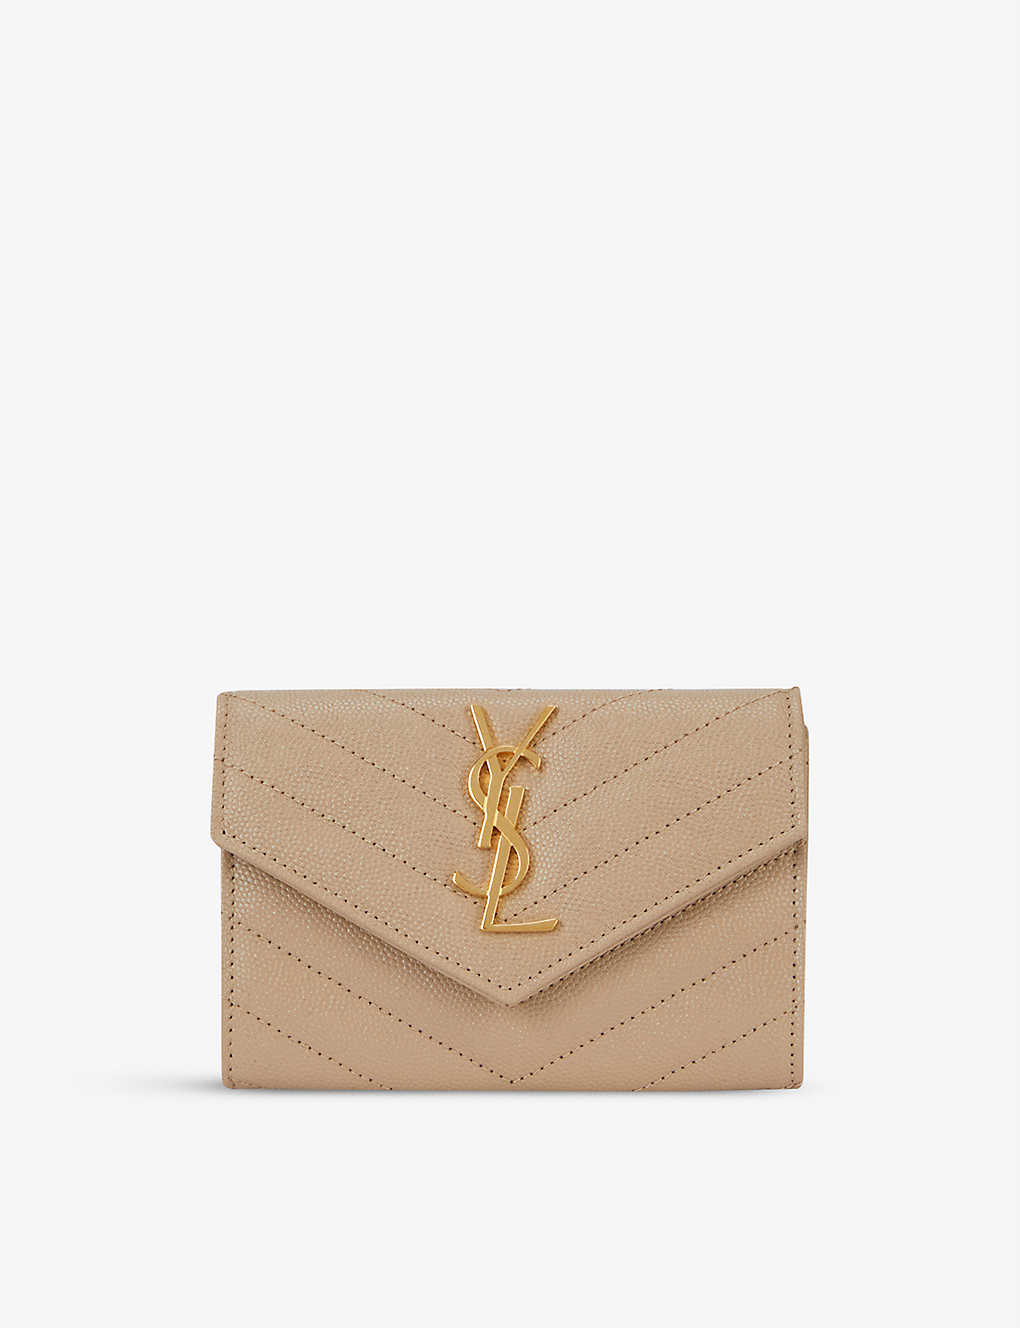 Saint Laurent Women's Monogram Small Envelope Wallet